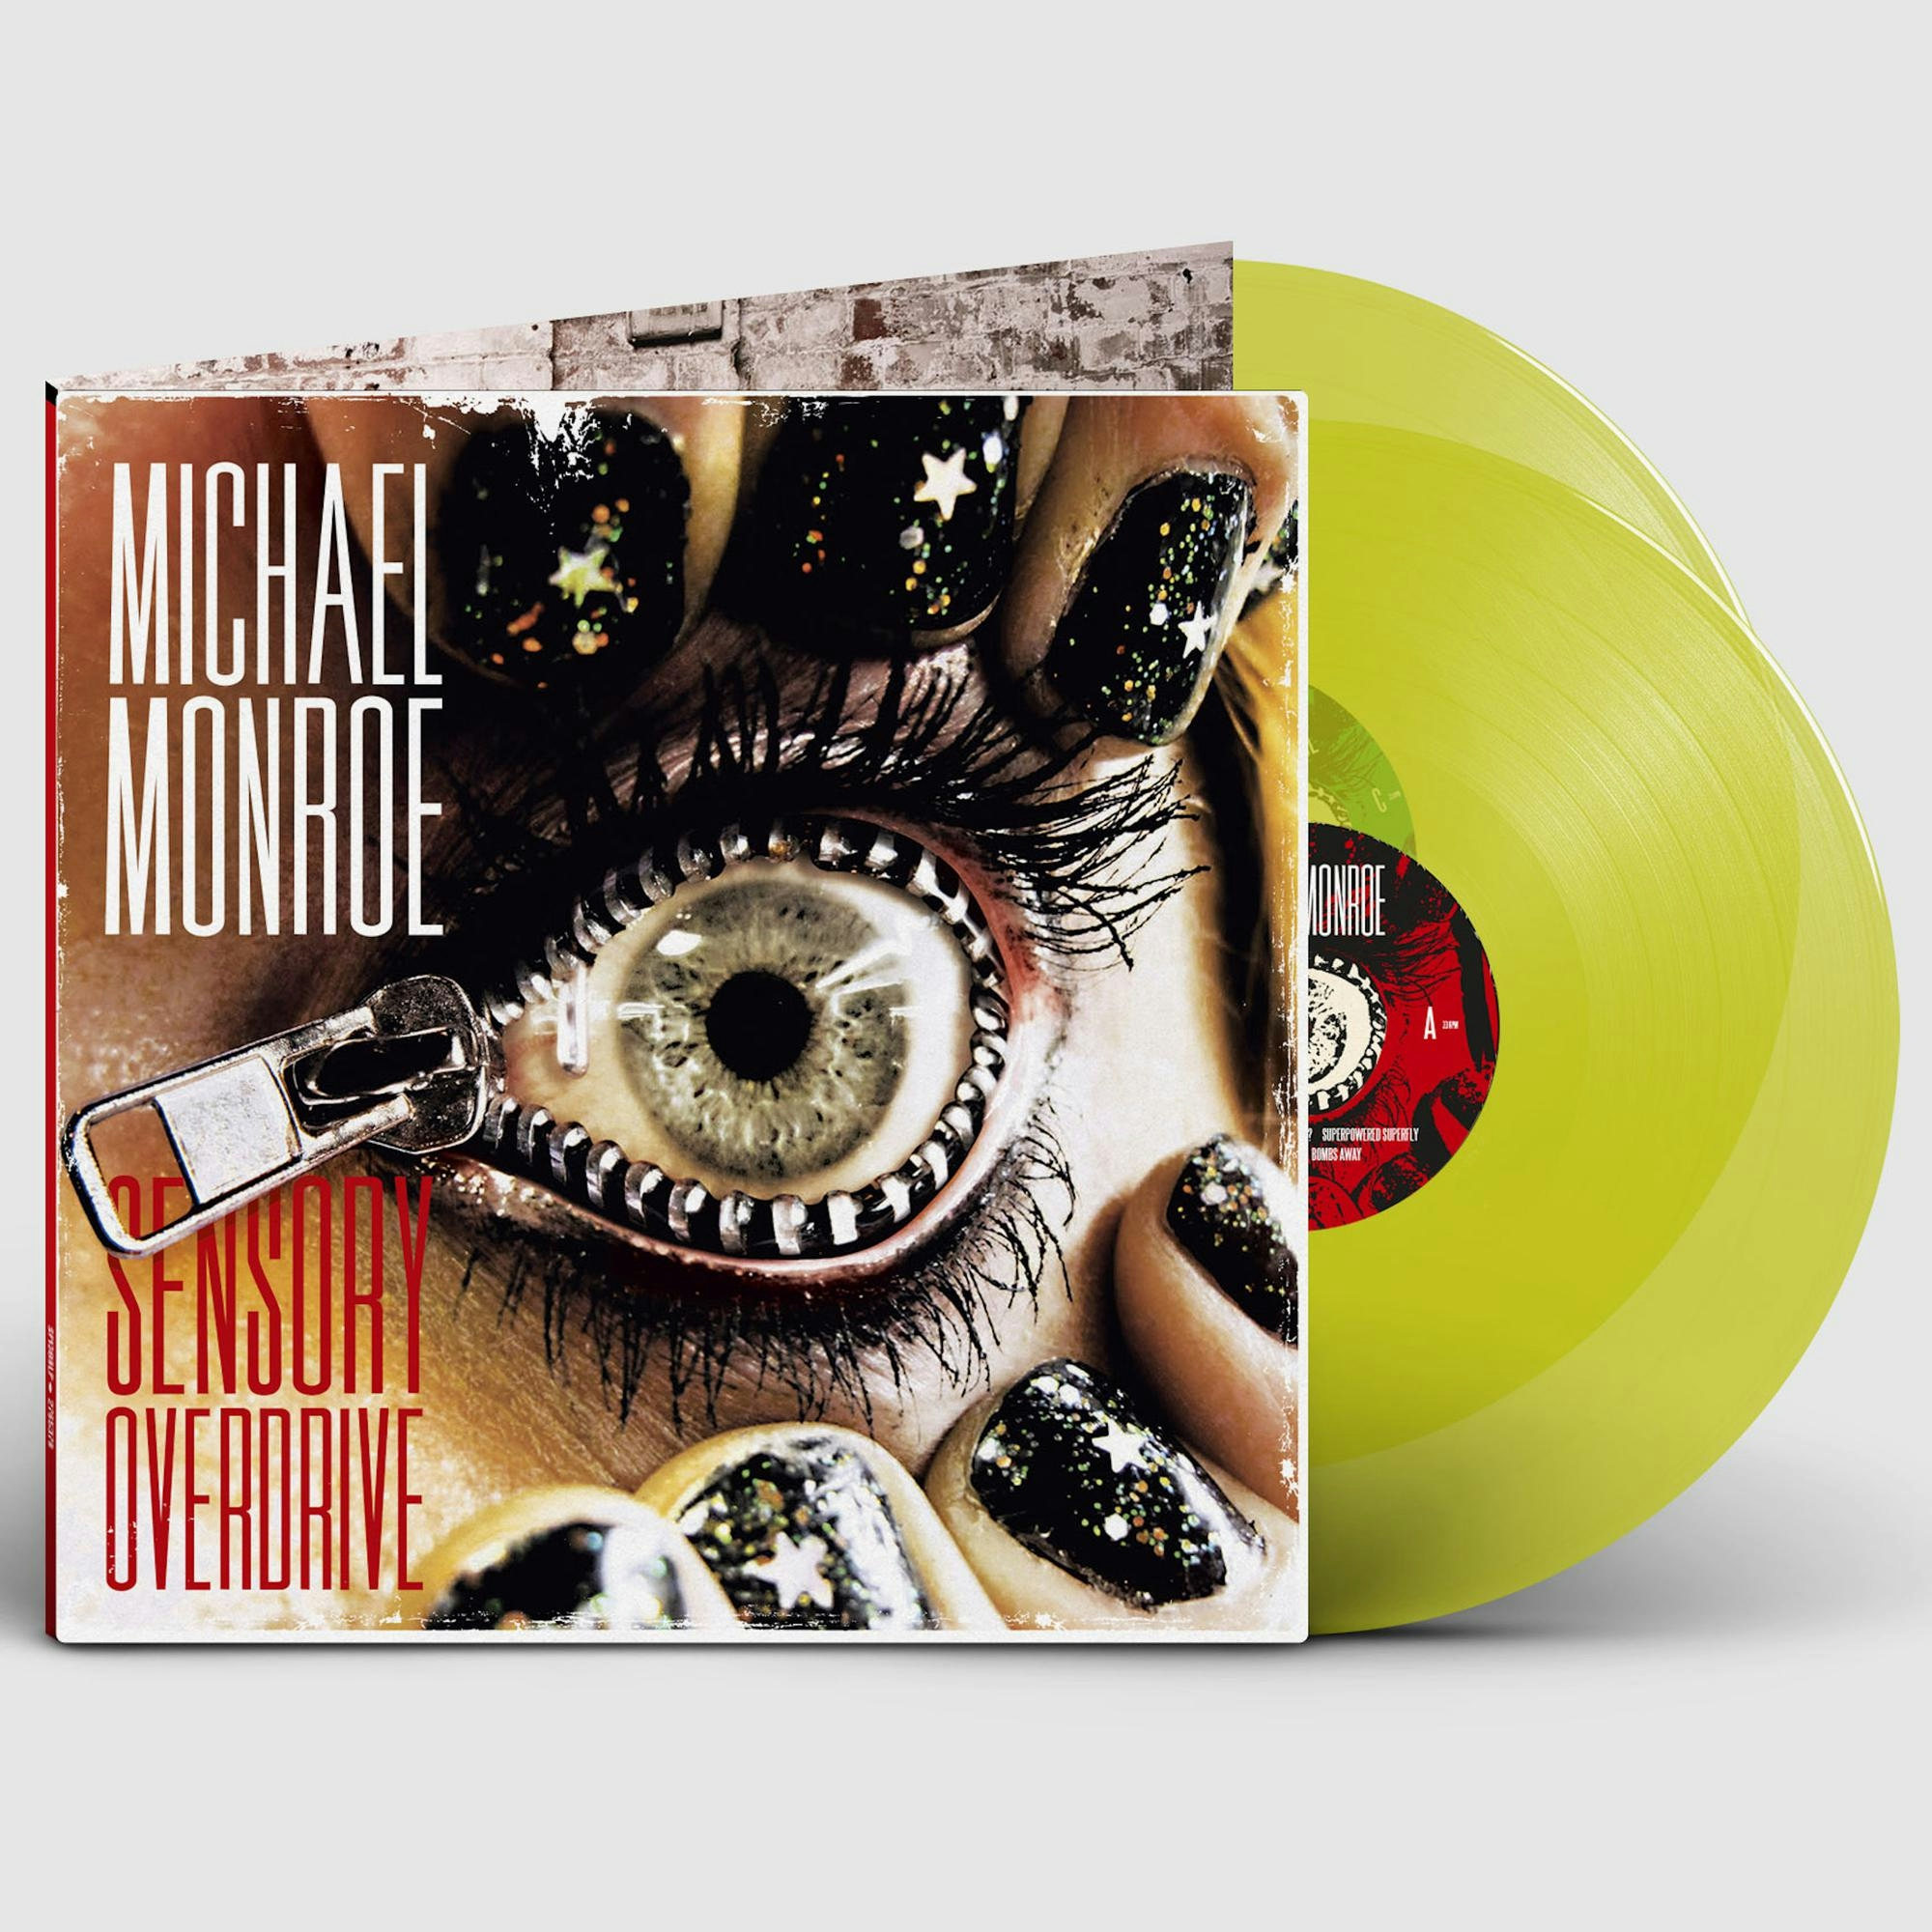 Album artwork for Sensory Overdrive by Michael Monroe